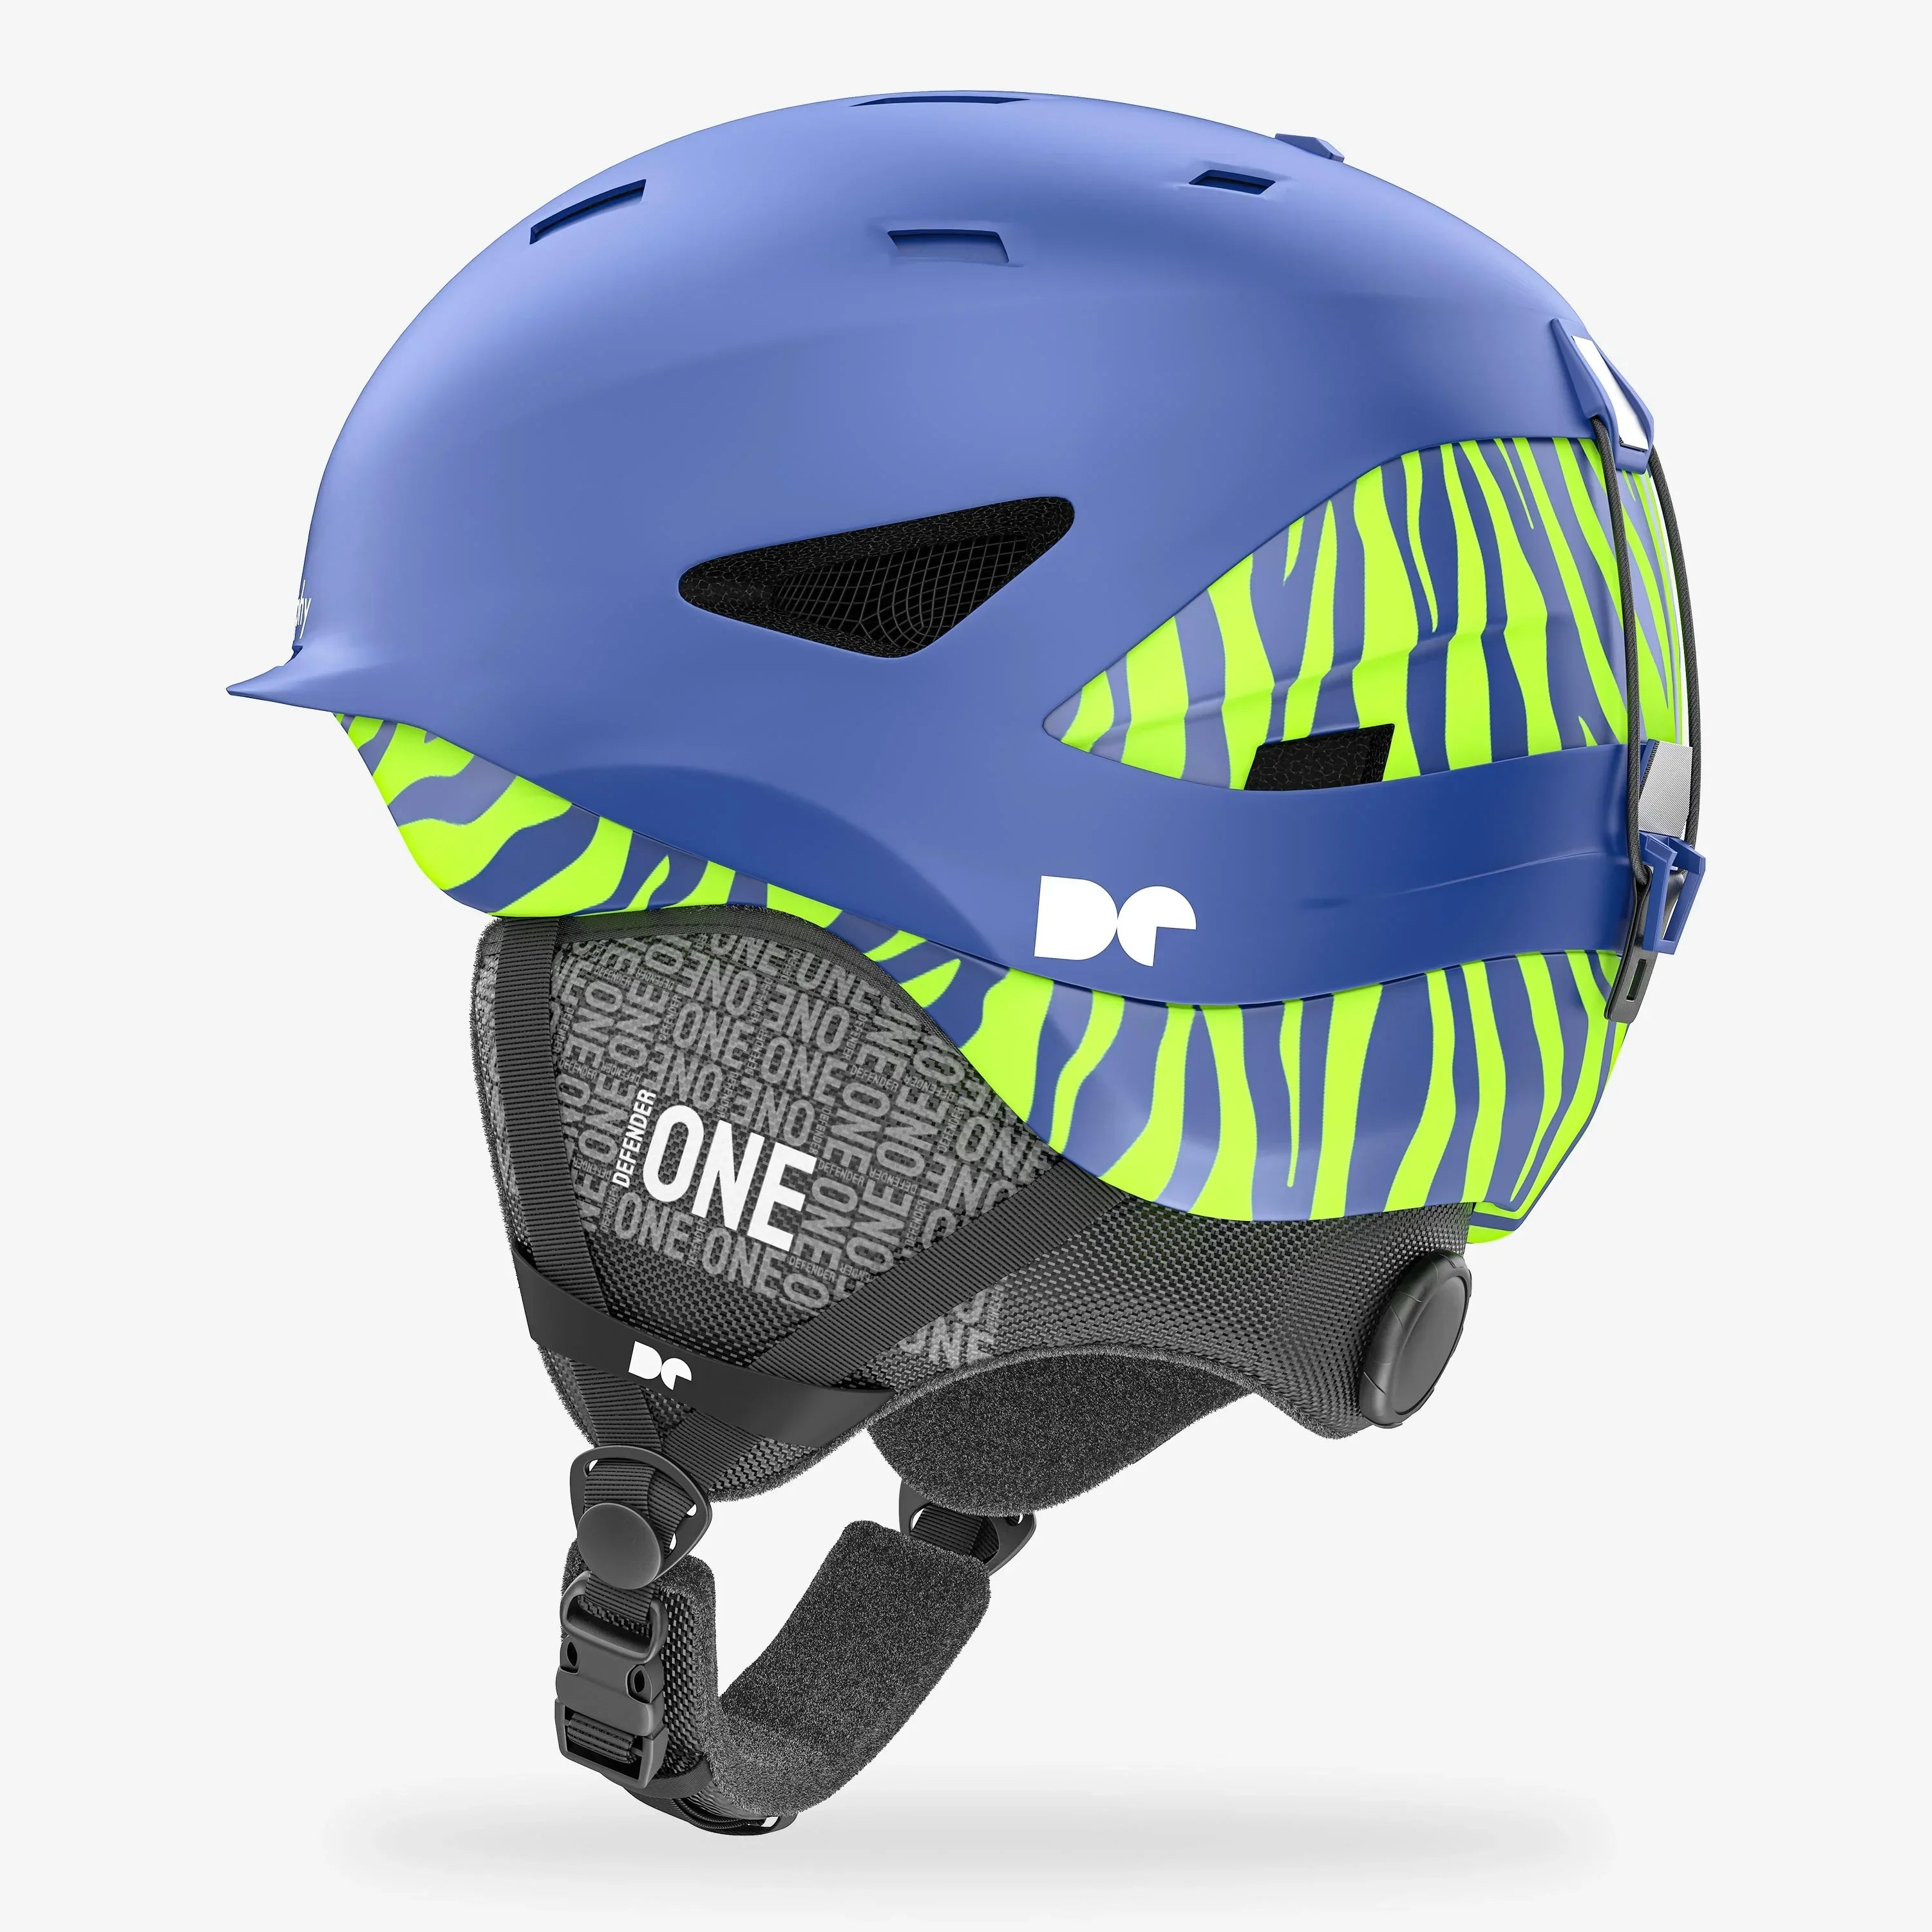 Defender One Royal Blue Ski Helmet